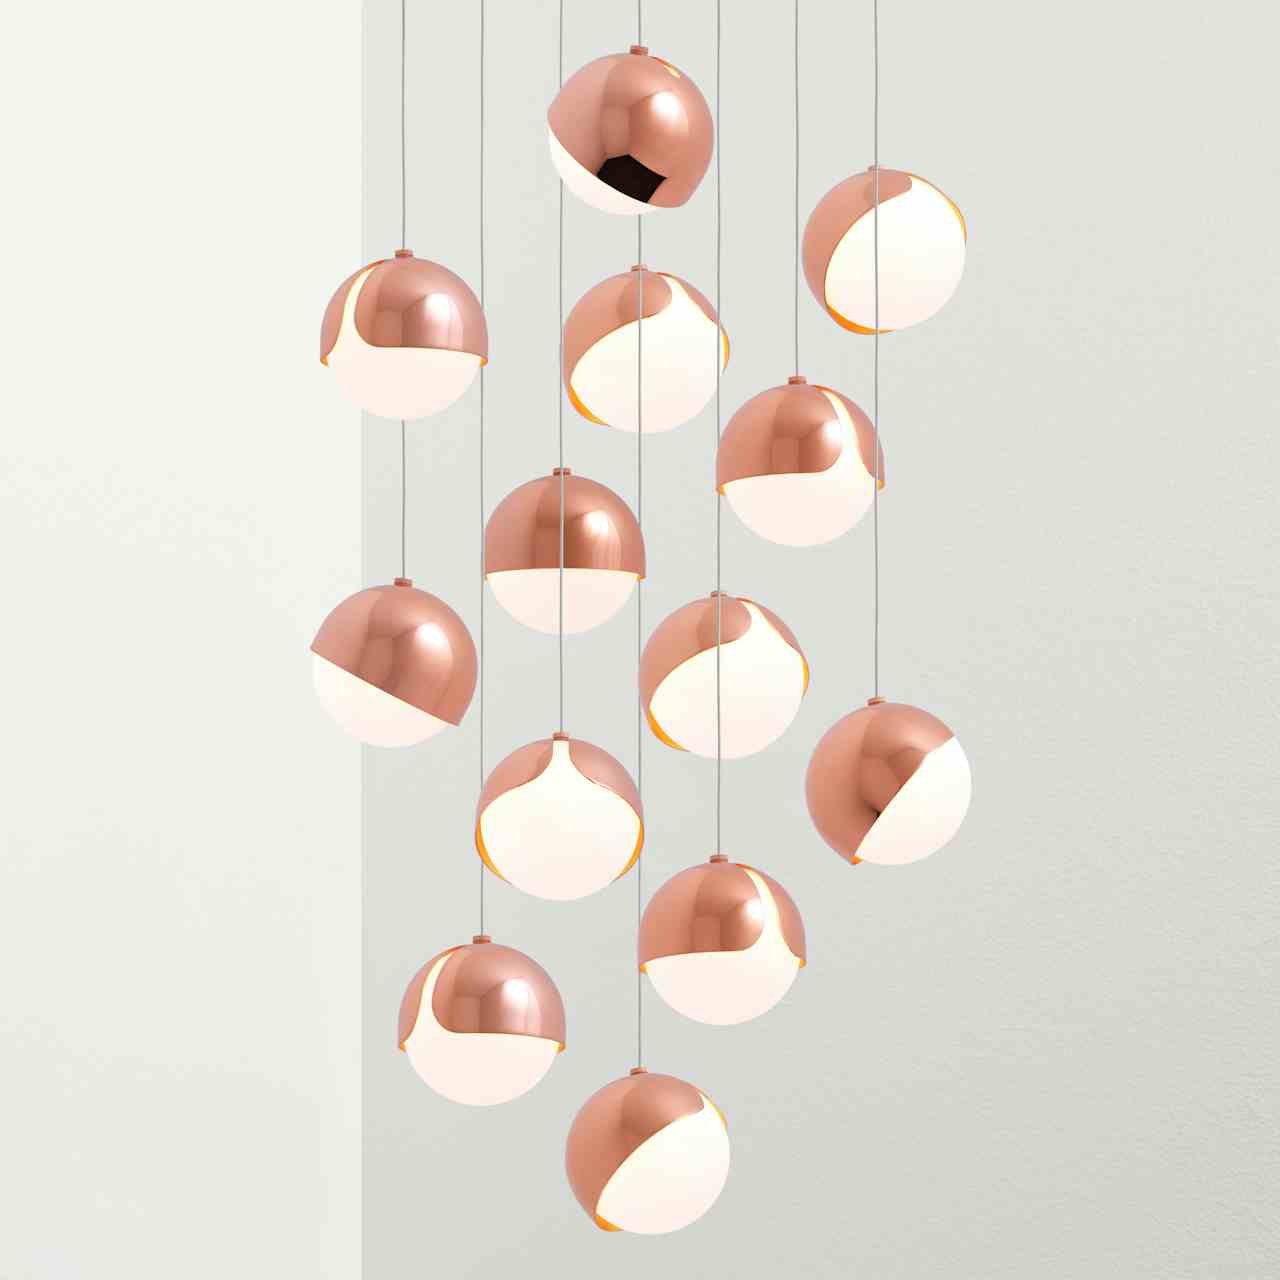 Anony ohm 13 chandelier copper on haute living